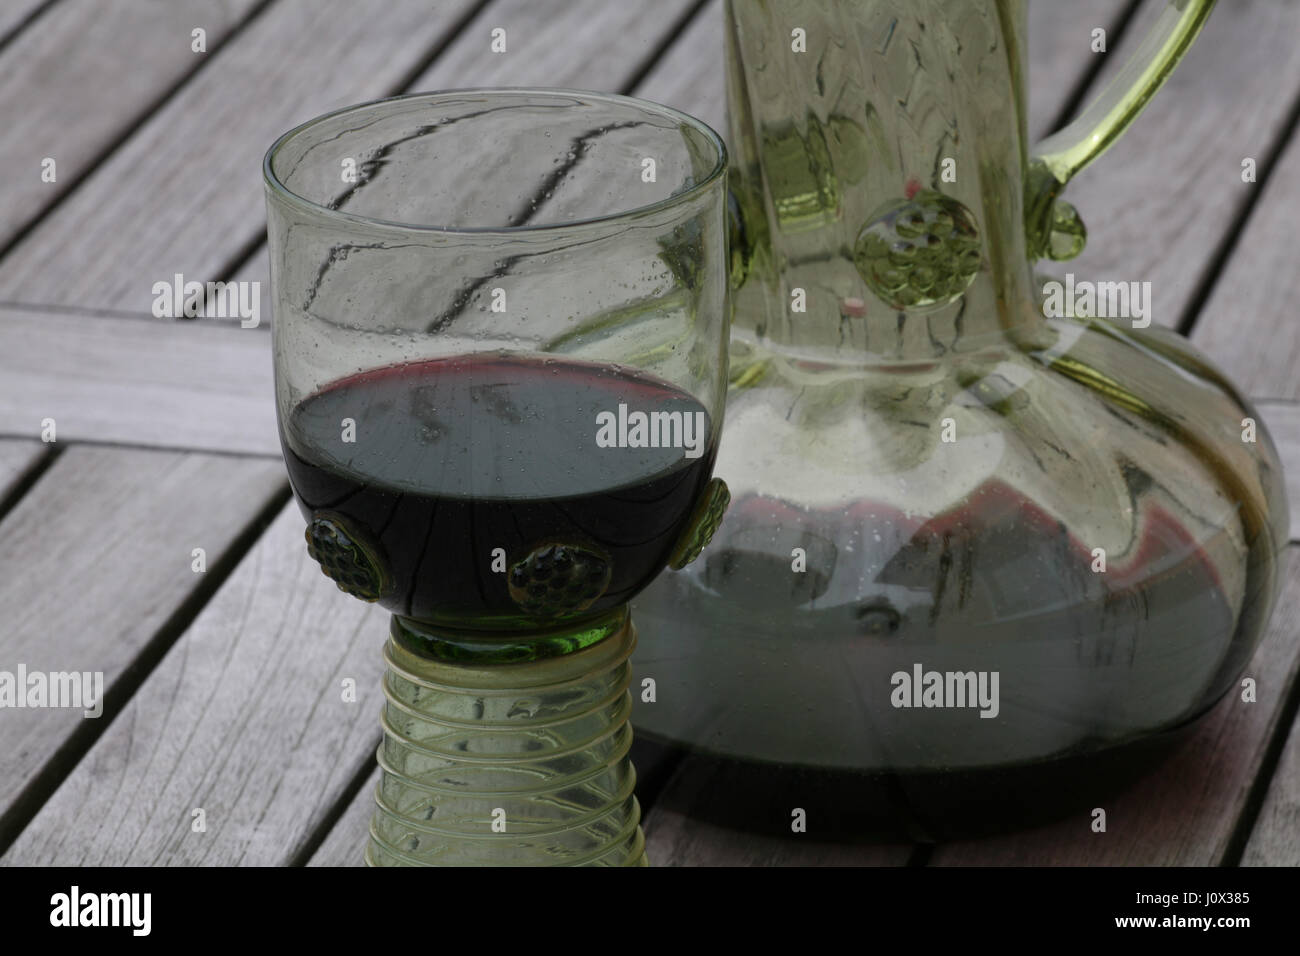 https://c8.alamy.com/comp/J0X385/hand-made-wine-glass-on-wooden-background-J0X385.jpg